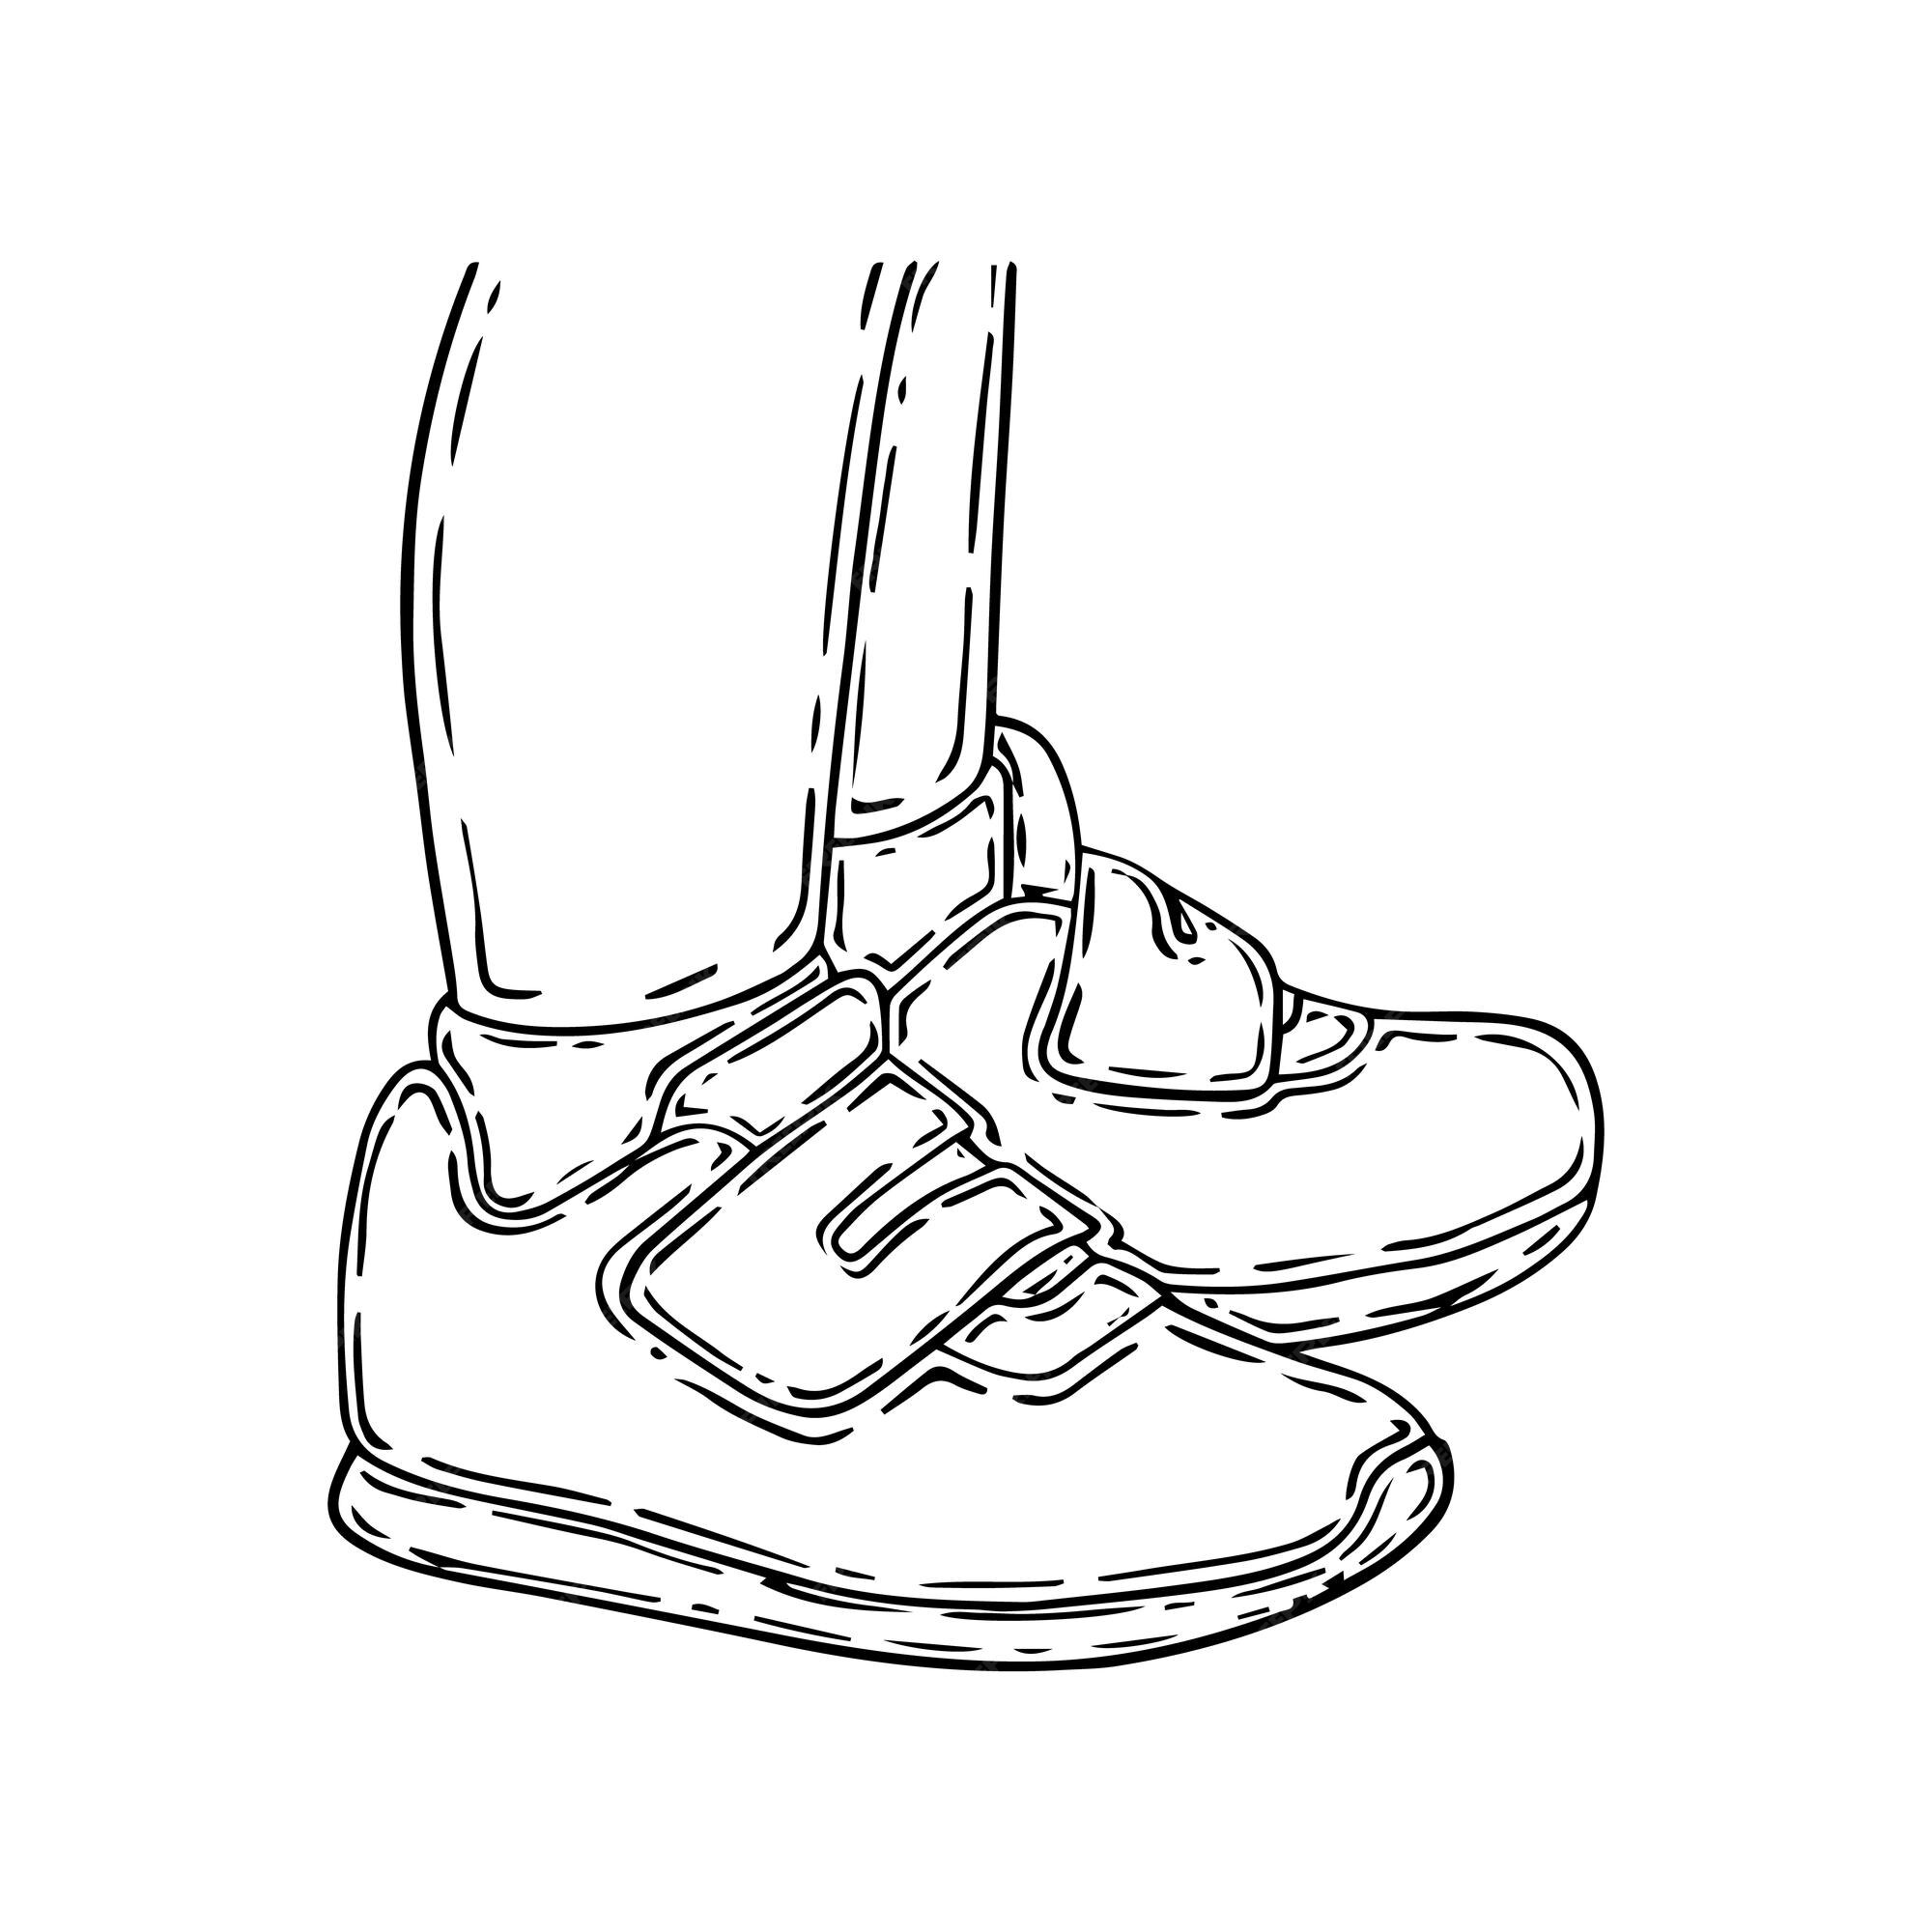 Pies de un niño en sandalias zapatos hombre niña dibujos animados lineales libro para colorear Vector Premium